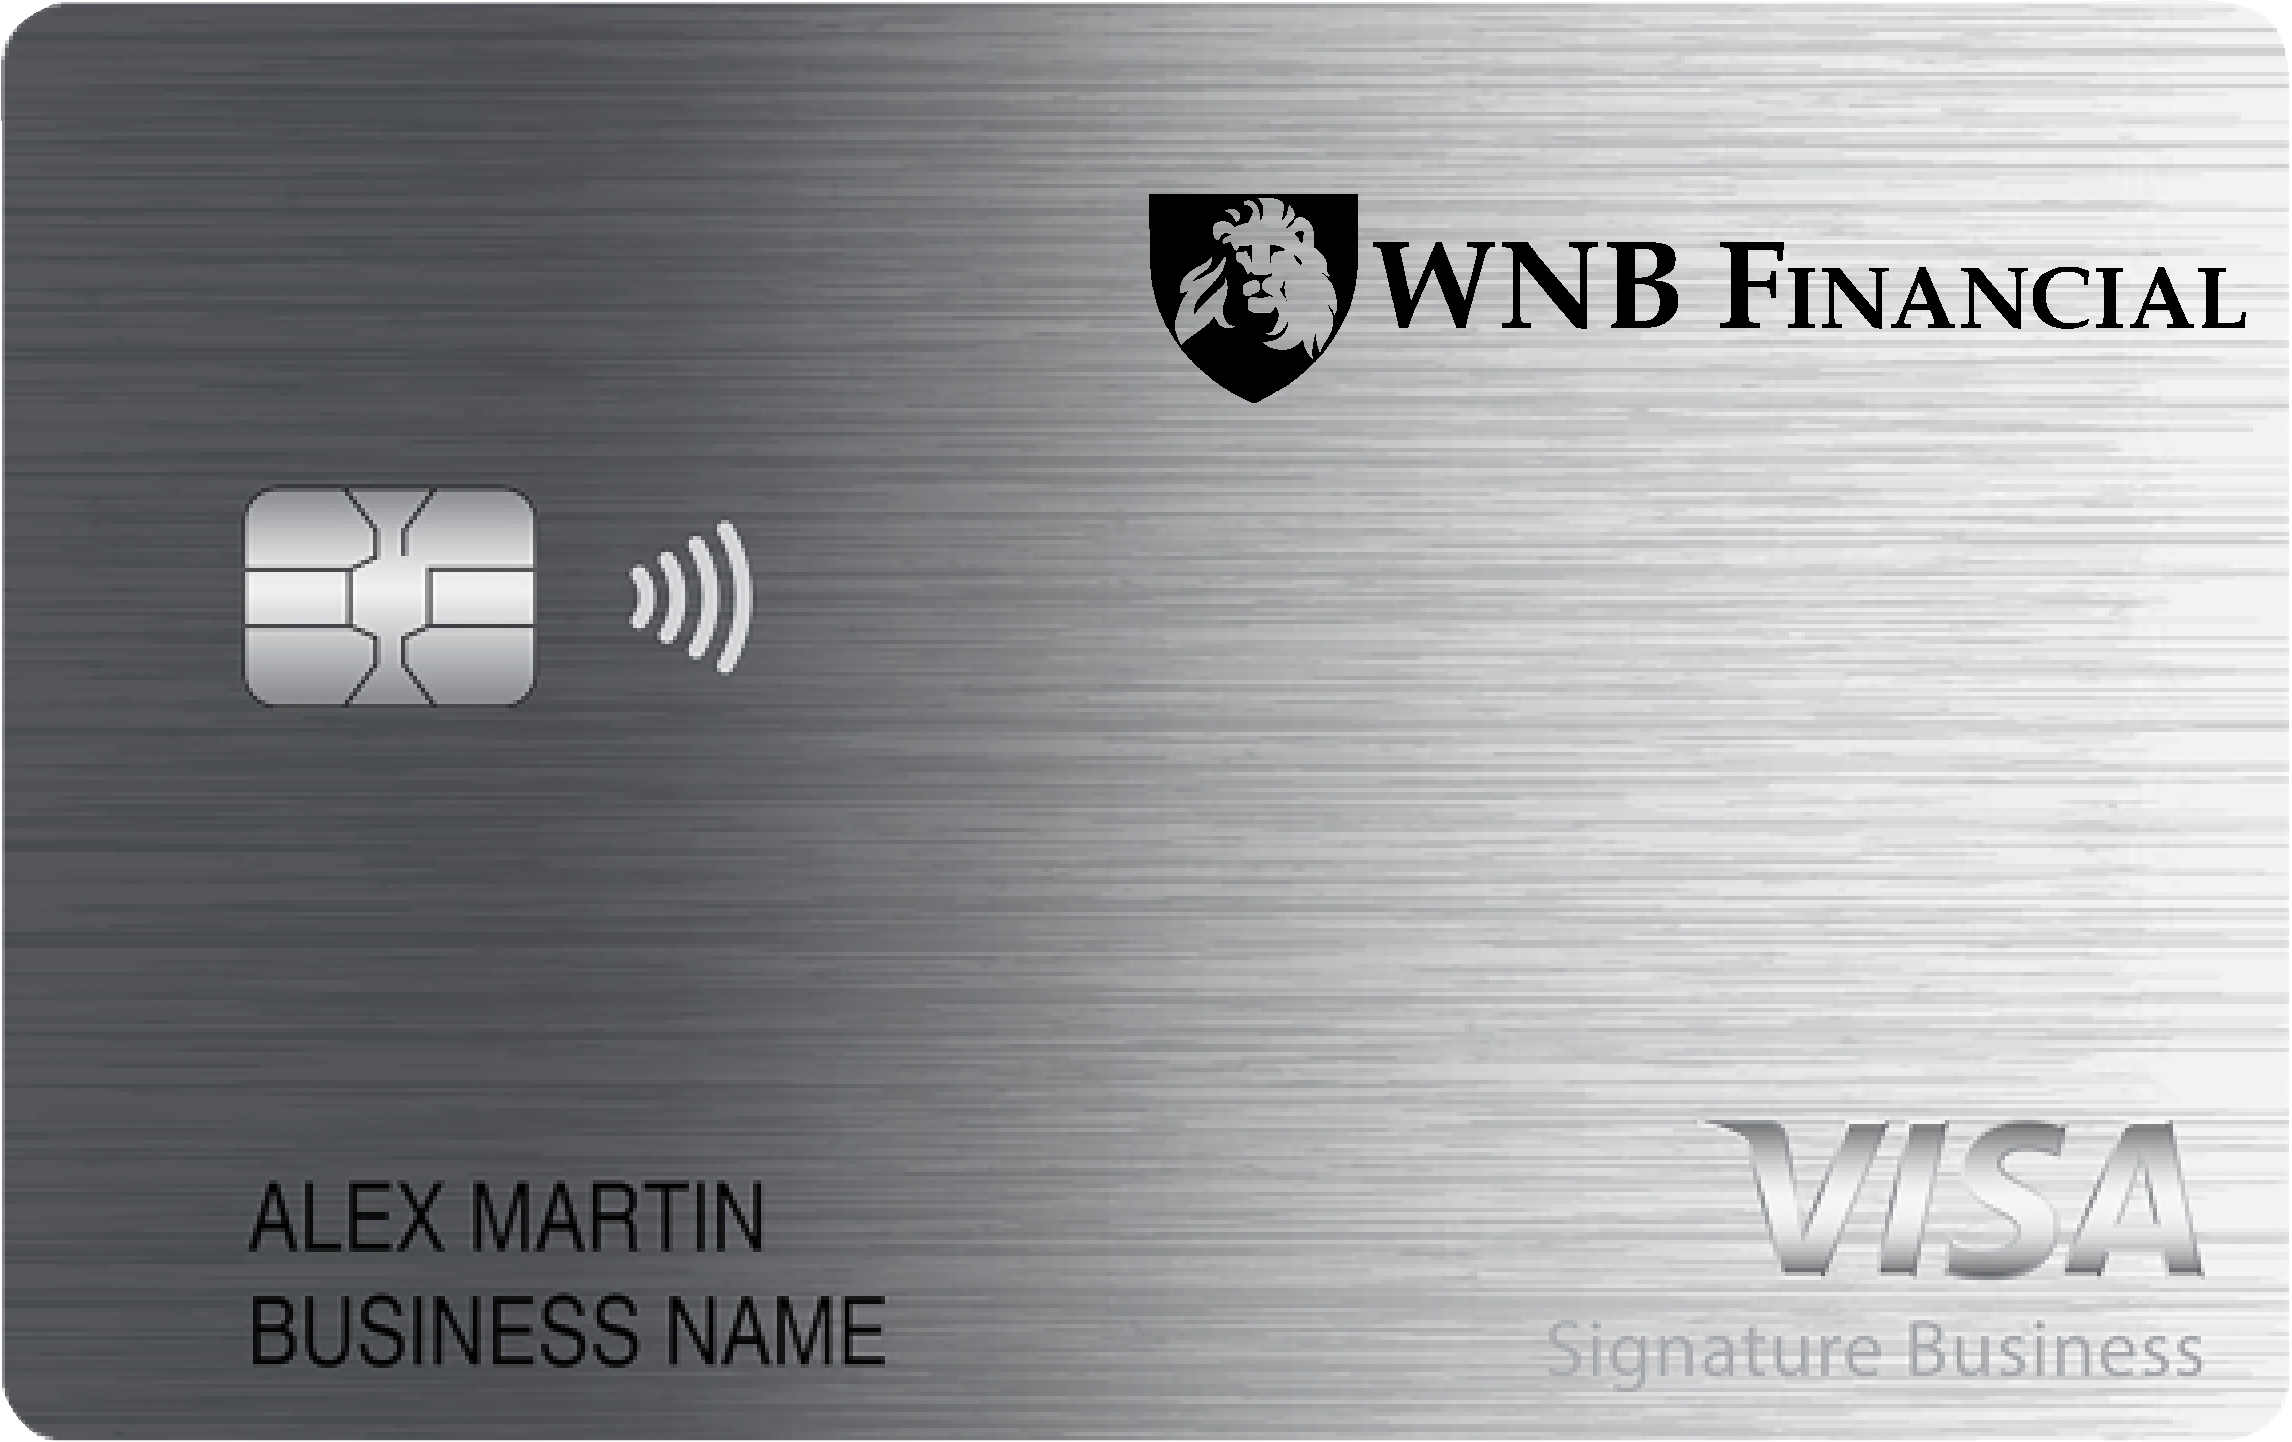 WNB Financial Smart Business Rewards Card